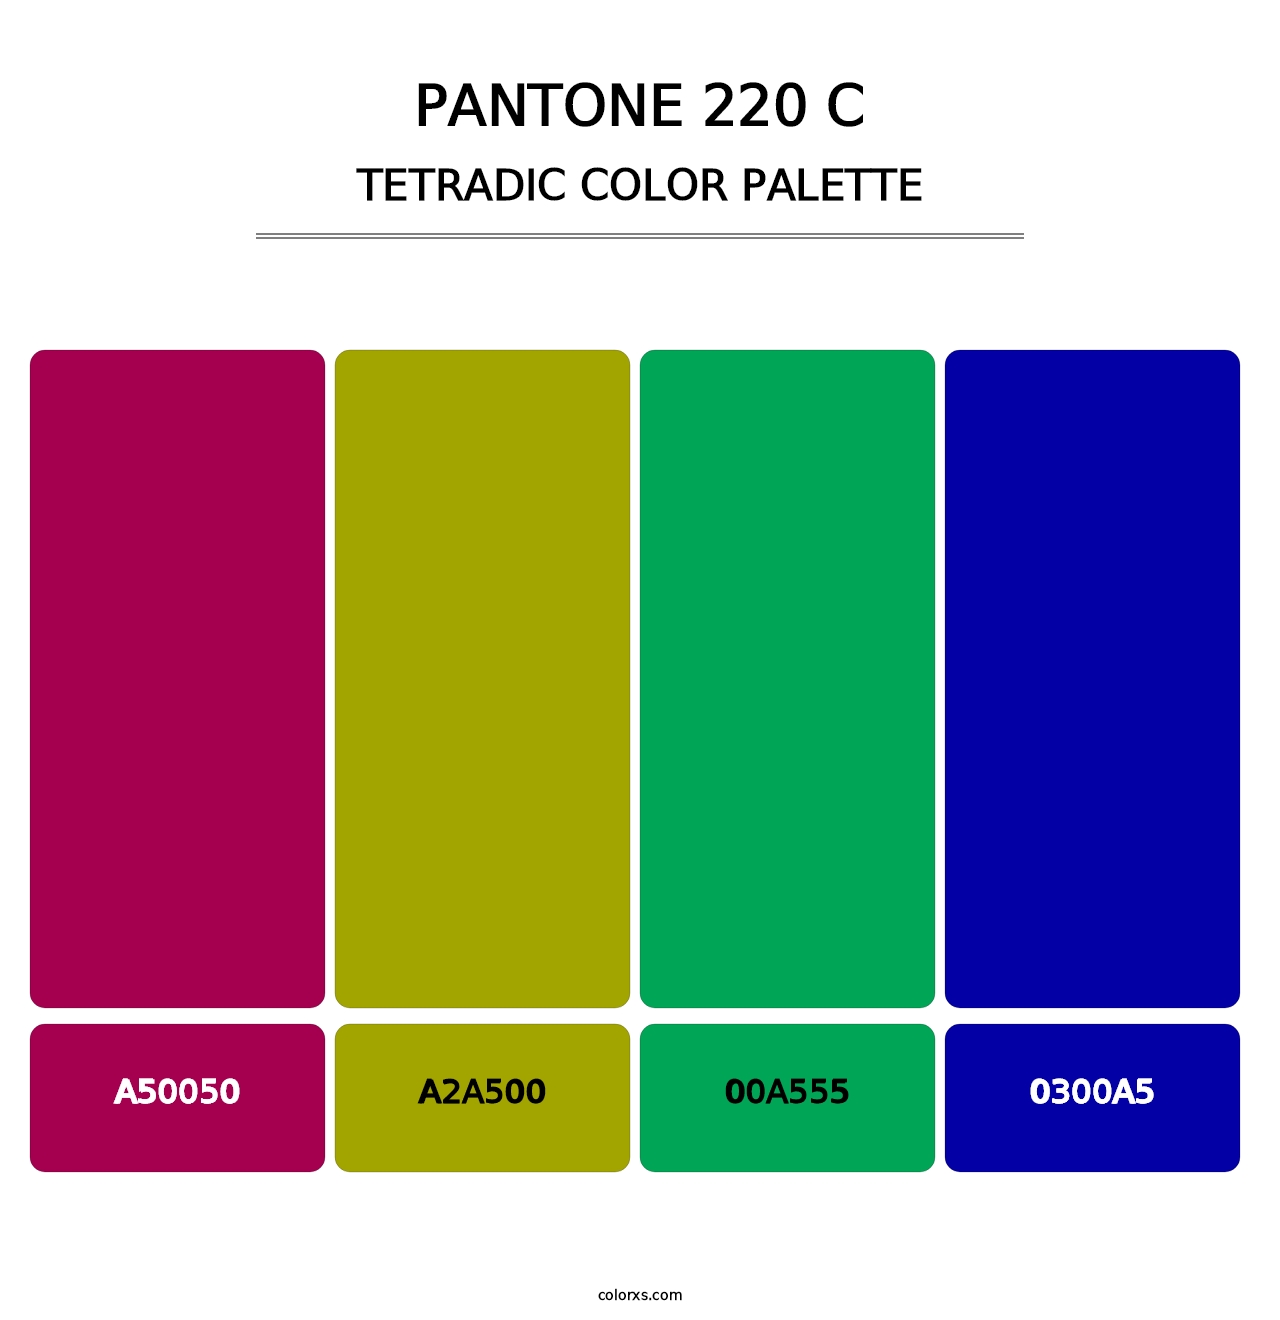 PANTONE 220 C - Tetradic Color Palette